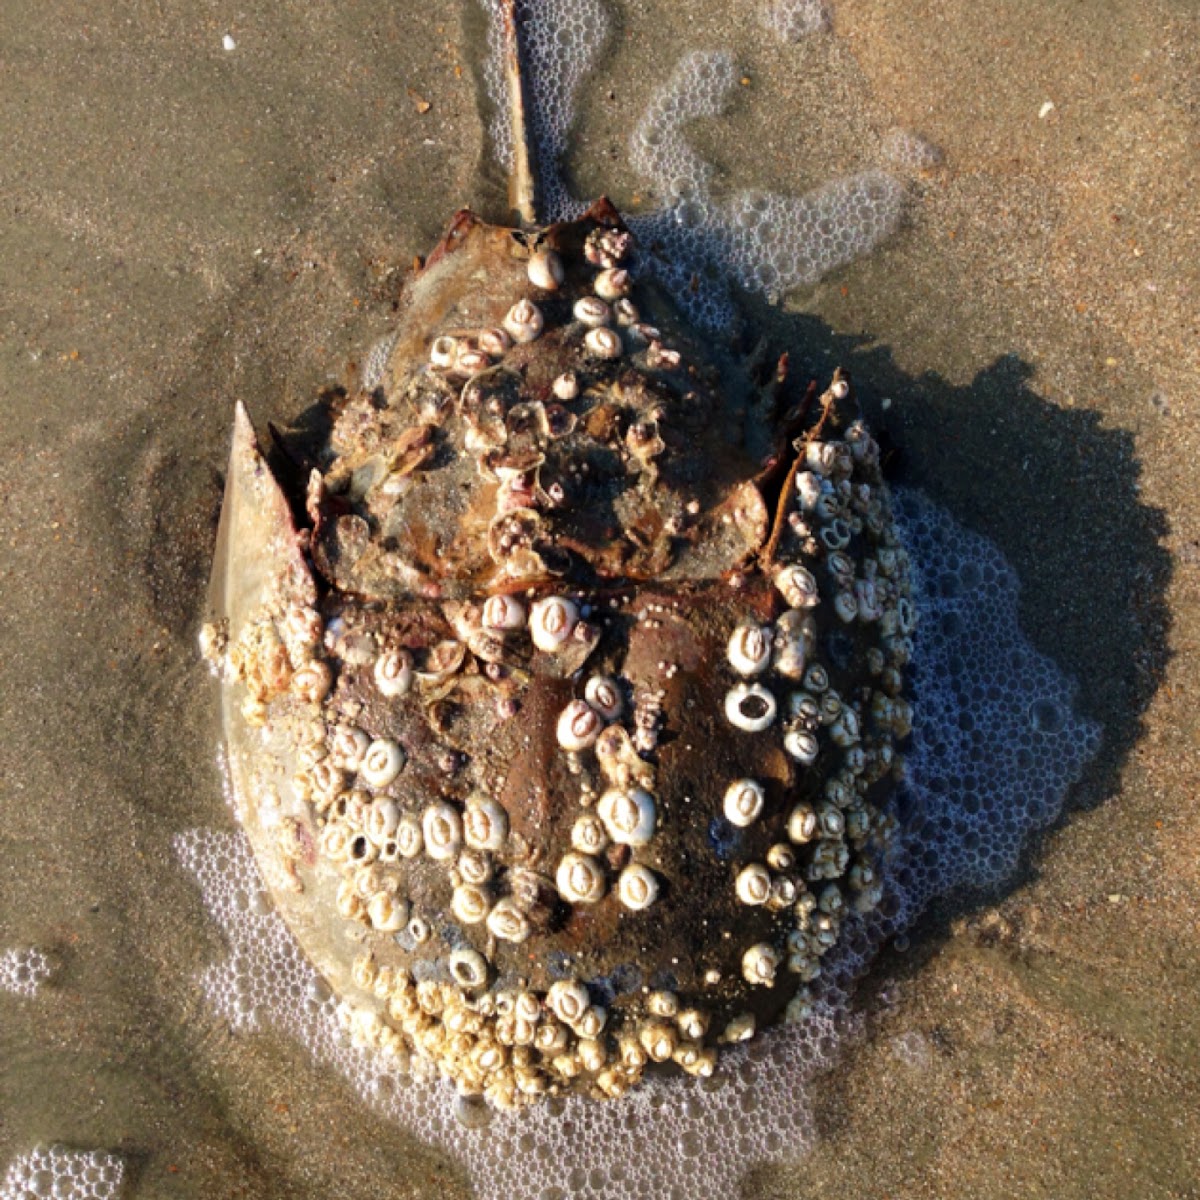 Atlantic Horseshoe Crab covered in barnacles